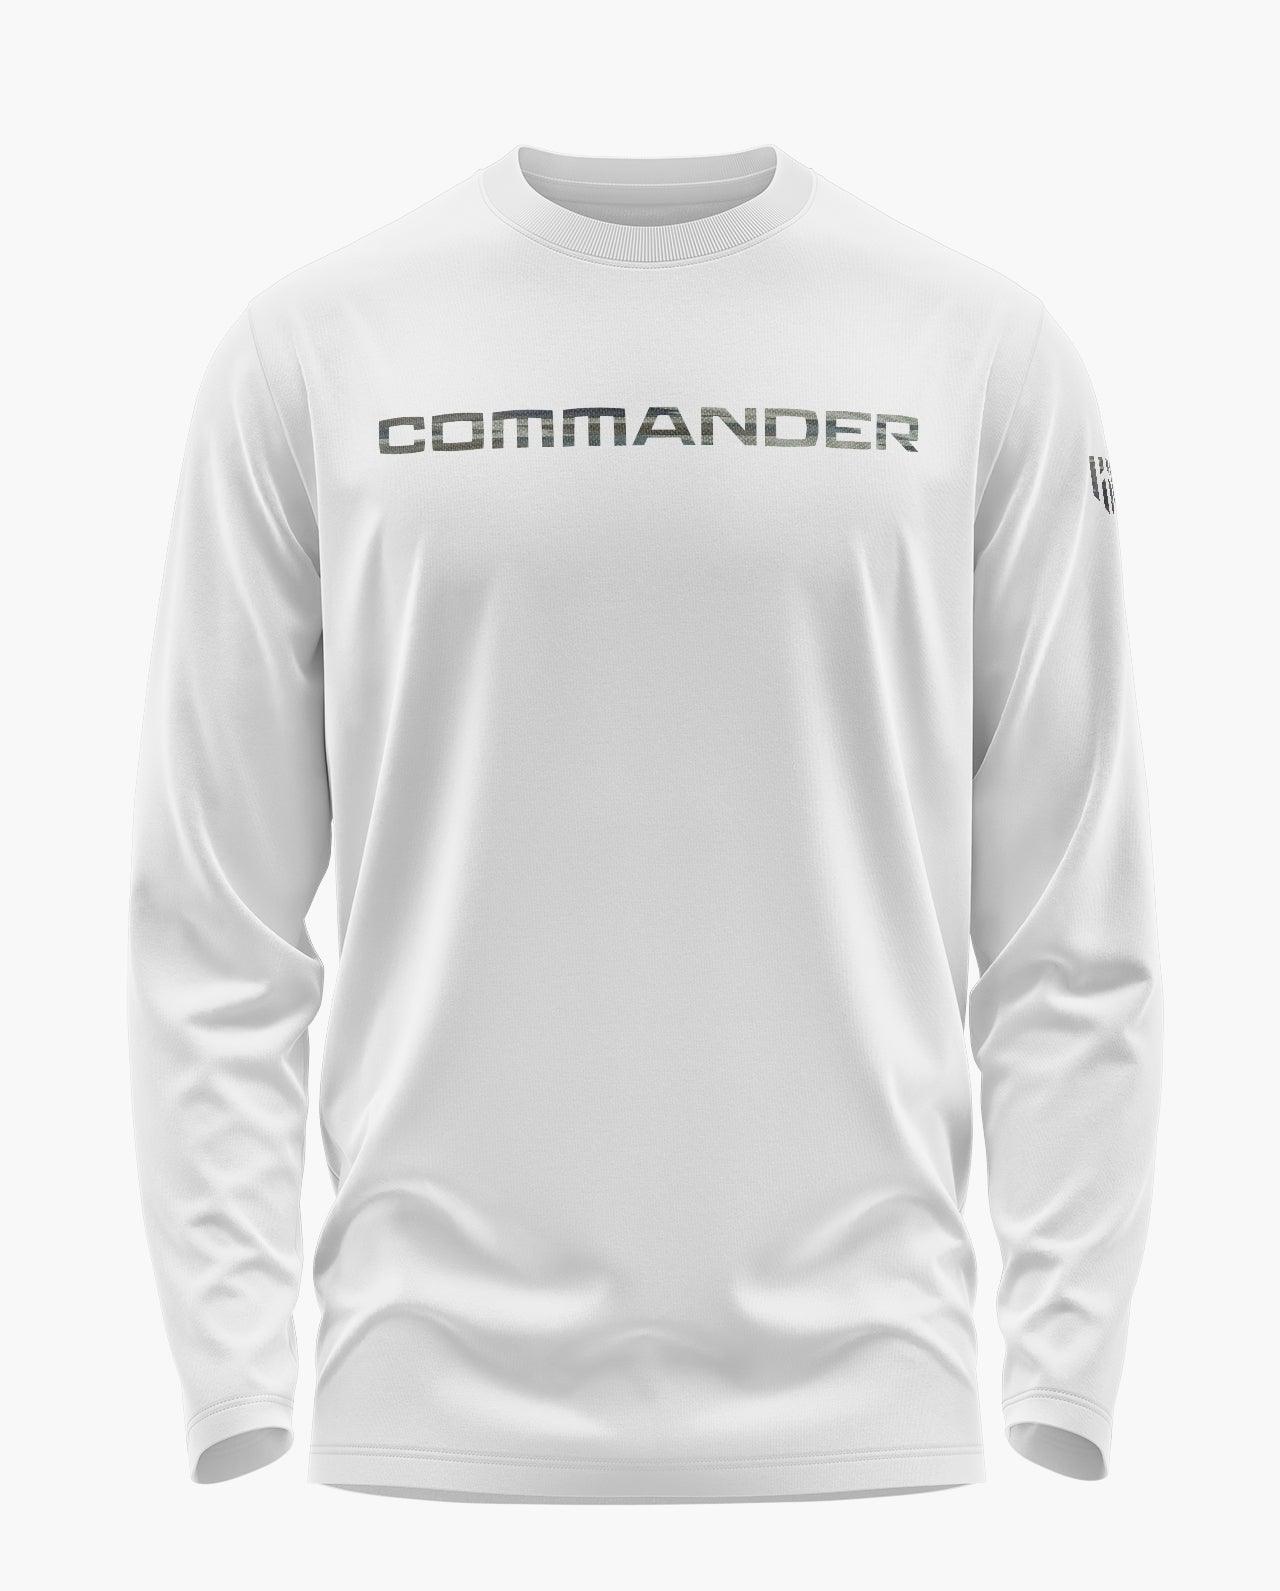 COMMANDER Full Sleeve T-Shirt - Aero Armour